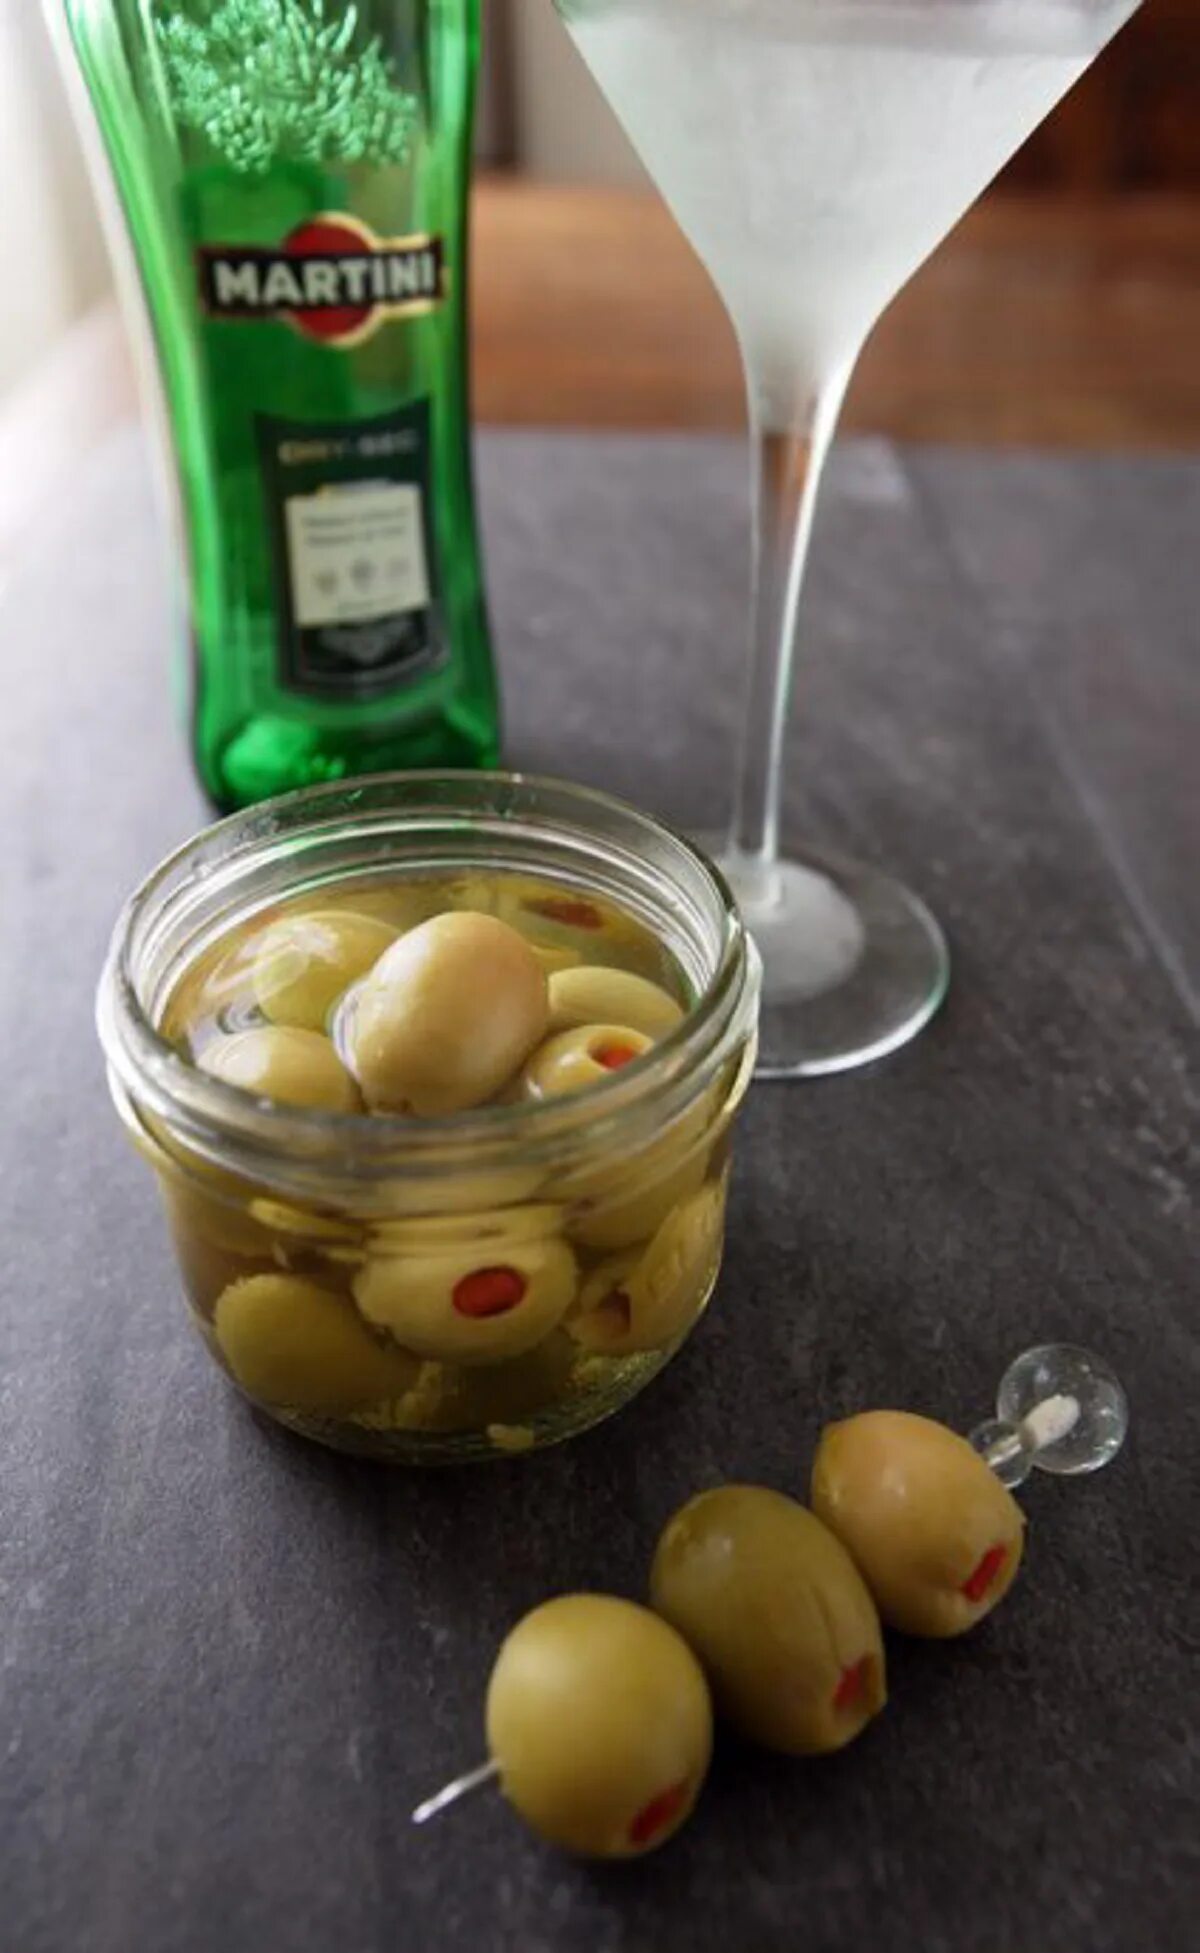 Маслины рассол. Мартини с оливкой. Вермут с оливками. Соленые оливки. Мартини на столе.